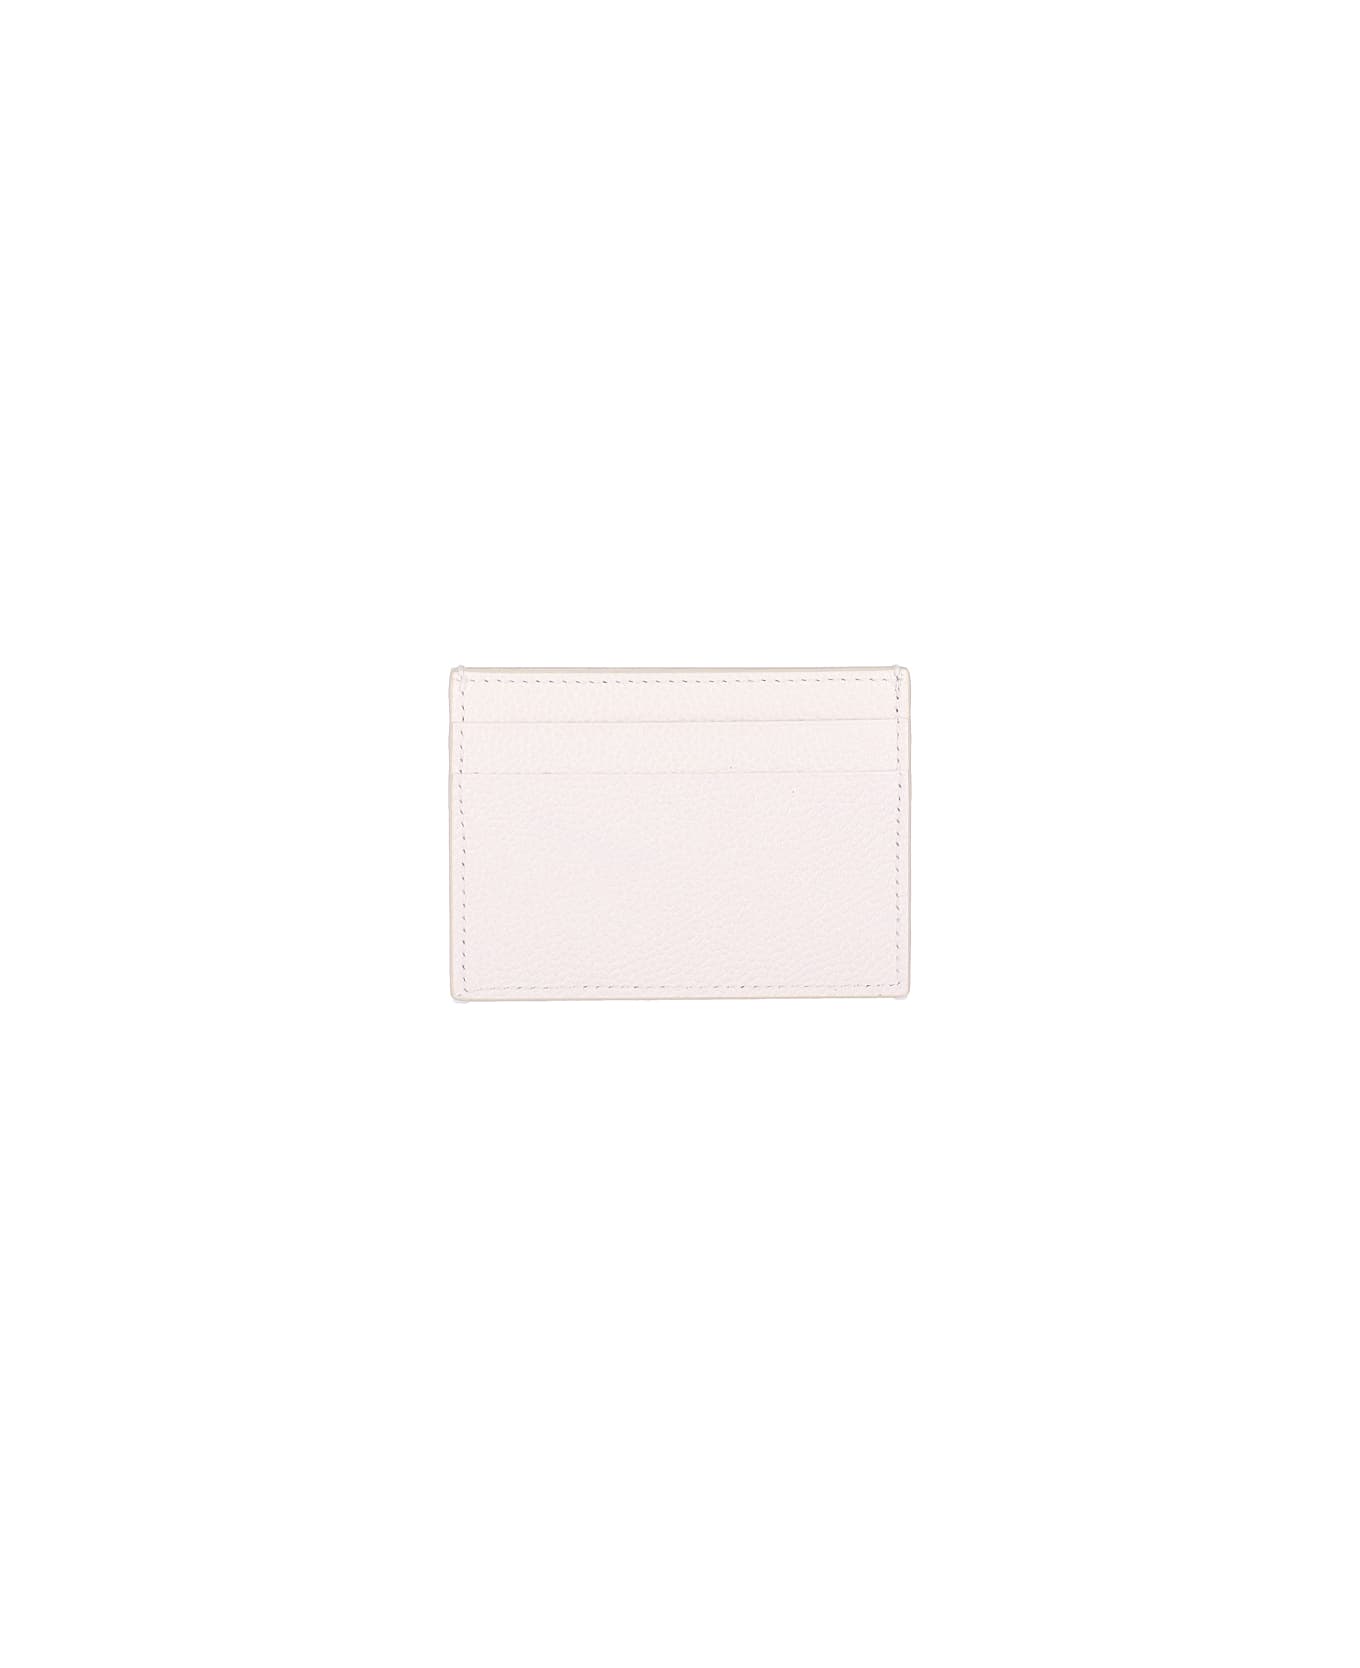 Thom Browne "pebble Grain" Card Holder - Pink 財布